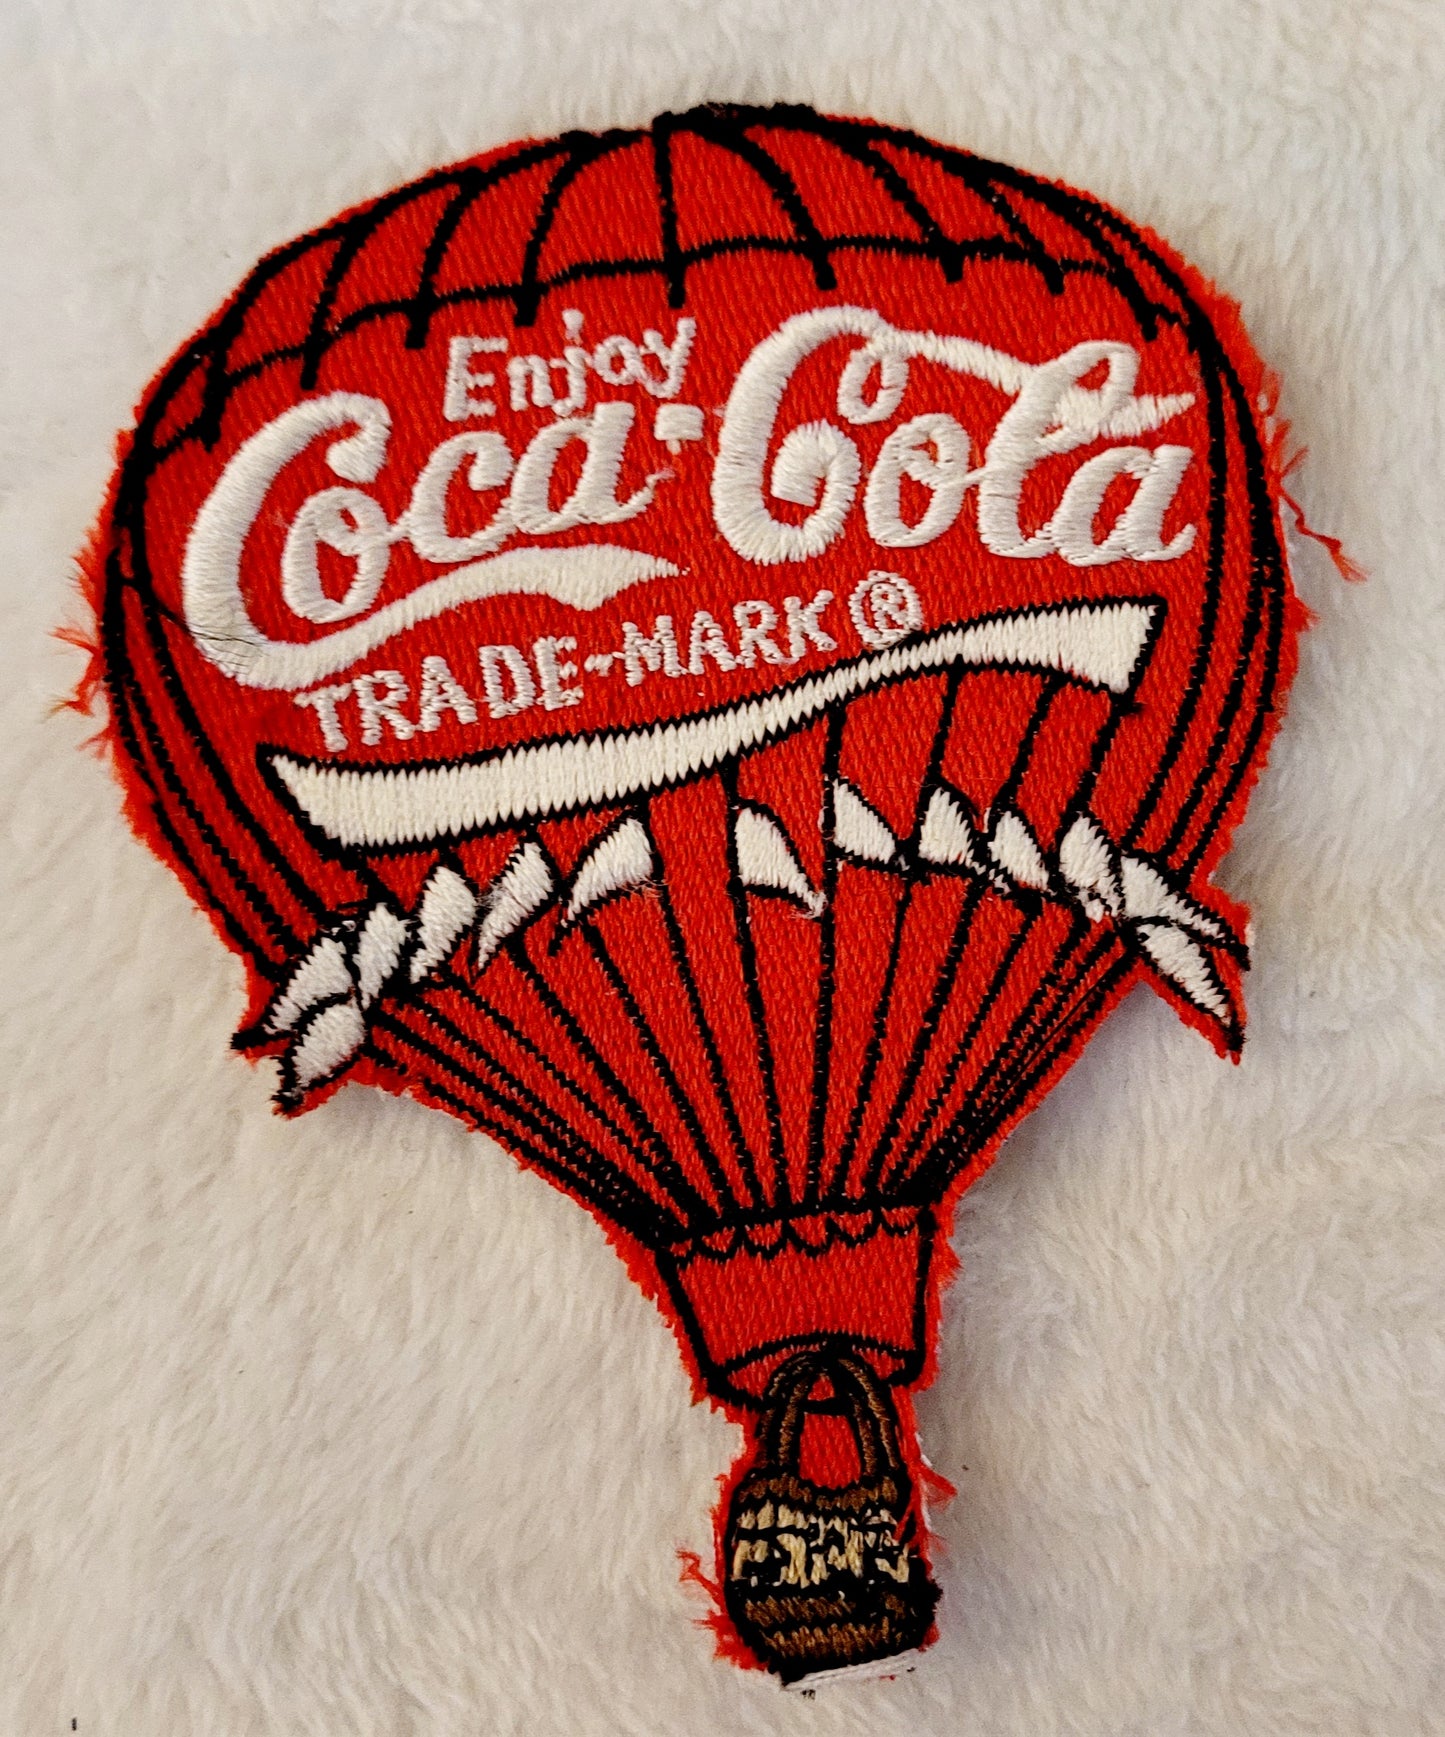 Red & White "Enjoy Coca-Cola" Balloon Shape *Hot Air Balloon Patch